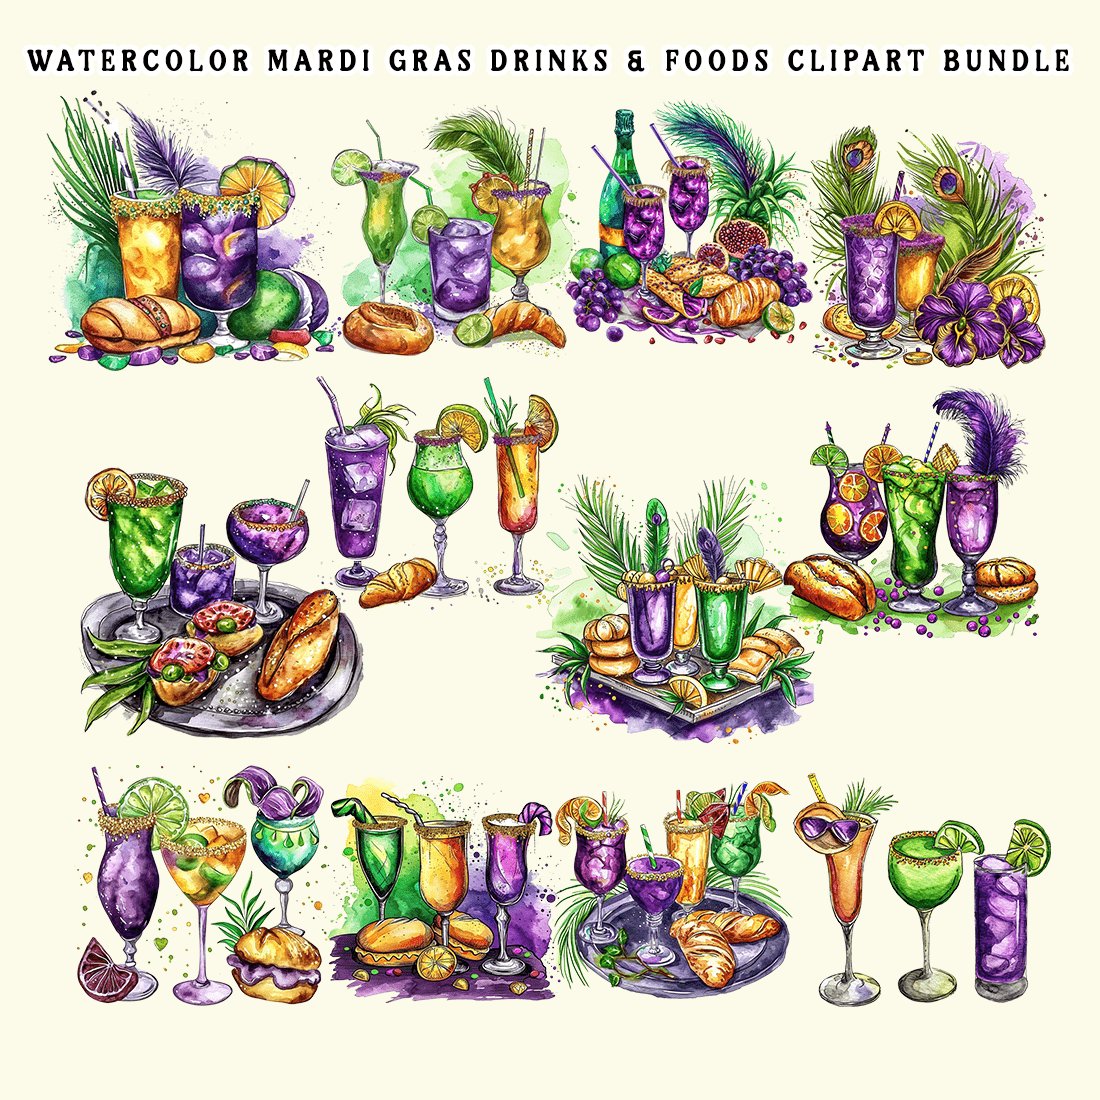 Watercolor Mardi Gras Drinks & Foods Clipart Bundle preview image.